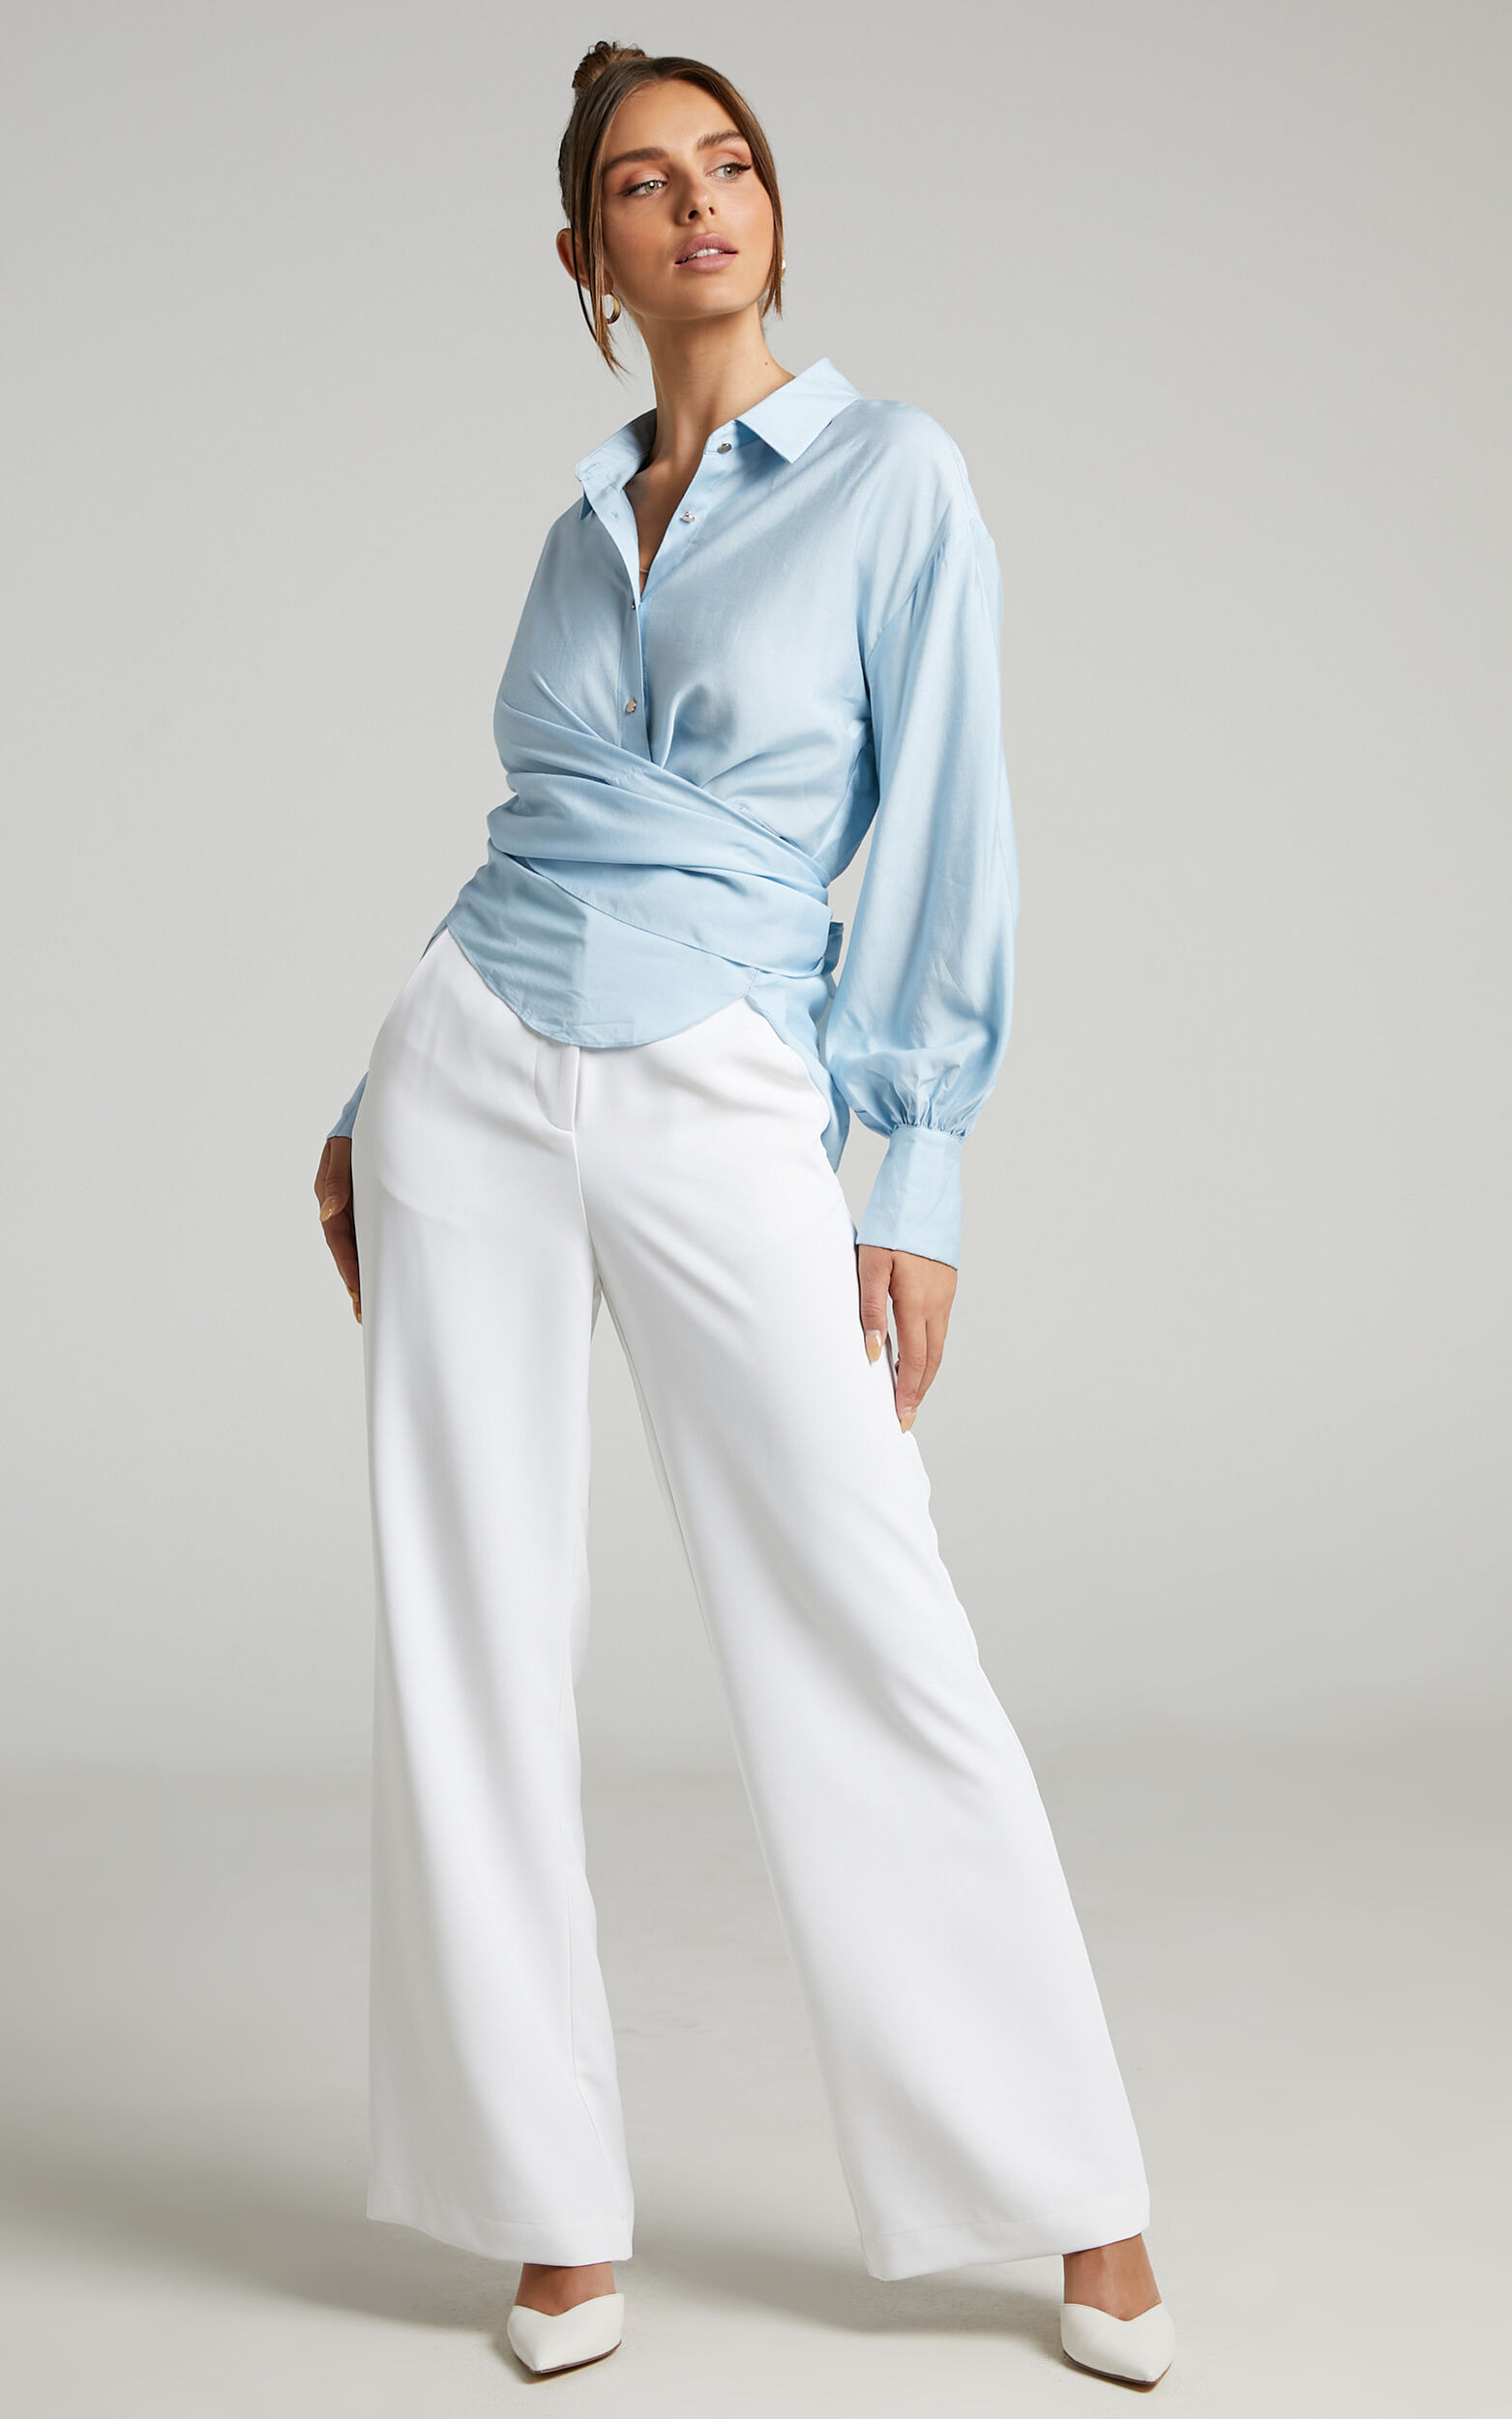 Ehrna Shirt - Twist Front Collared Long Sleeve Shirt in Blue | Showpo